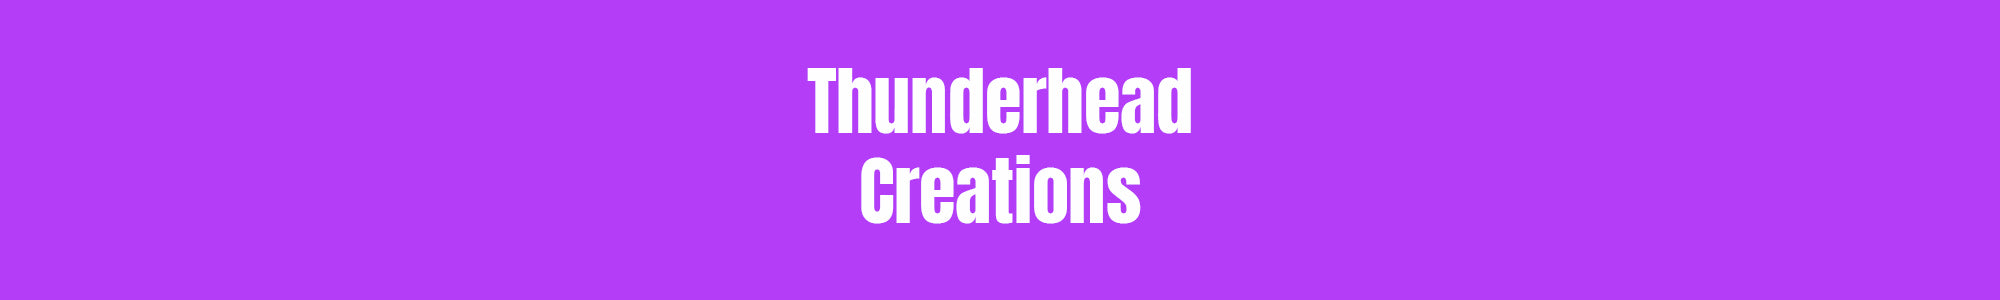 thunderhead creations uk